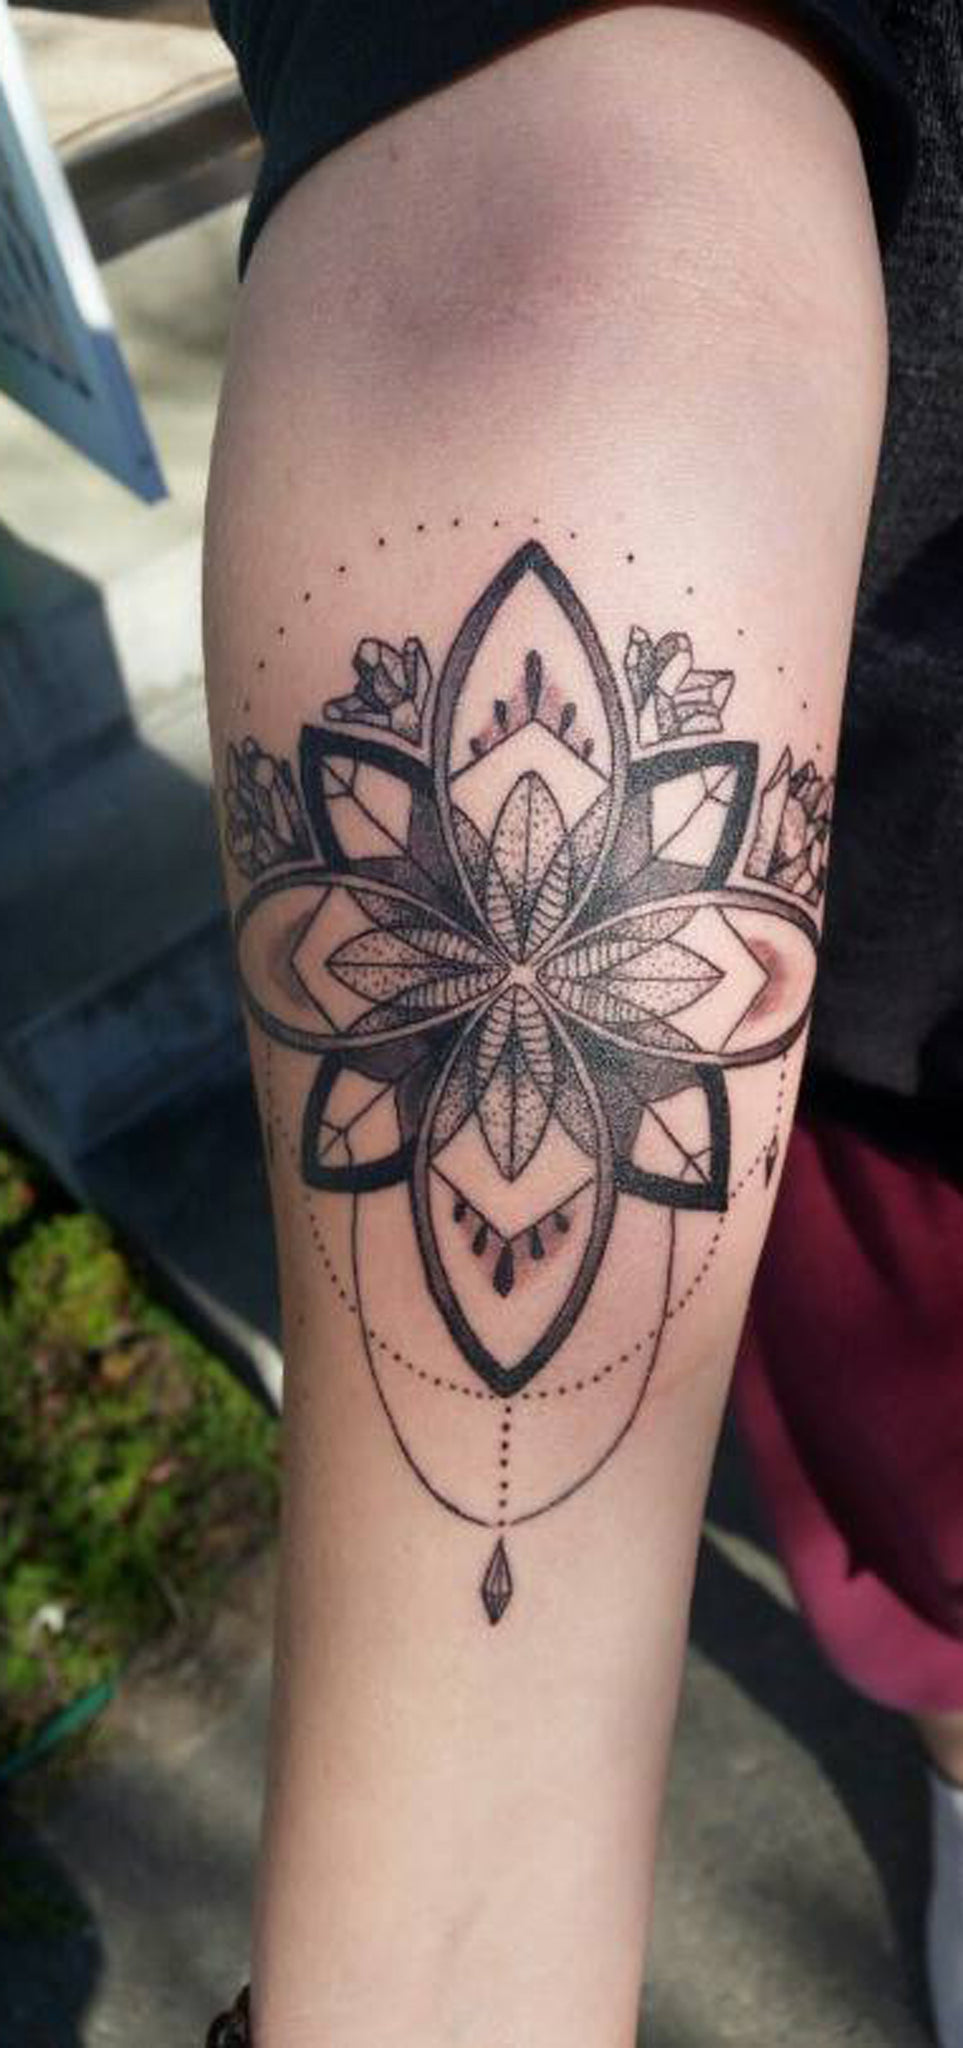 Lotus Chandelier Forearm Tattoo Ideas for Women - Black Sacred Geometric Arm Tat - www.MyBodiArt.com